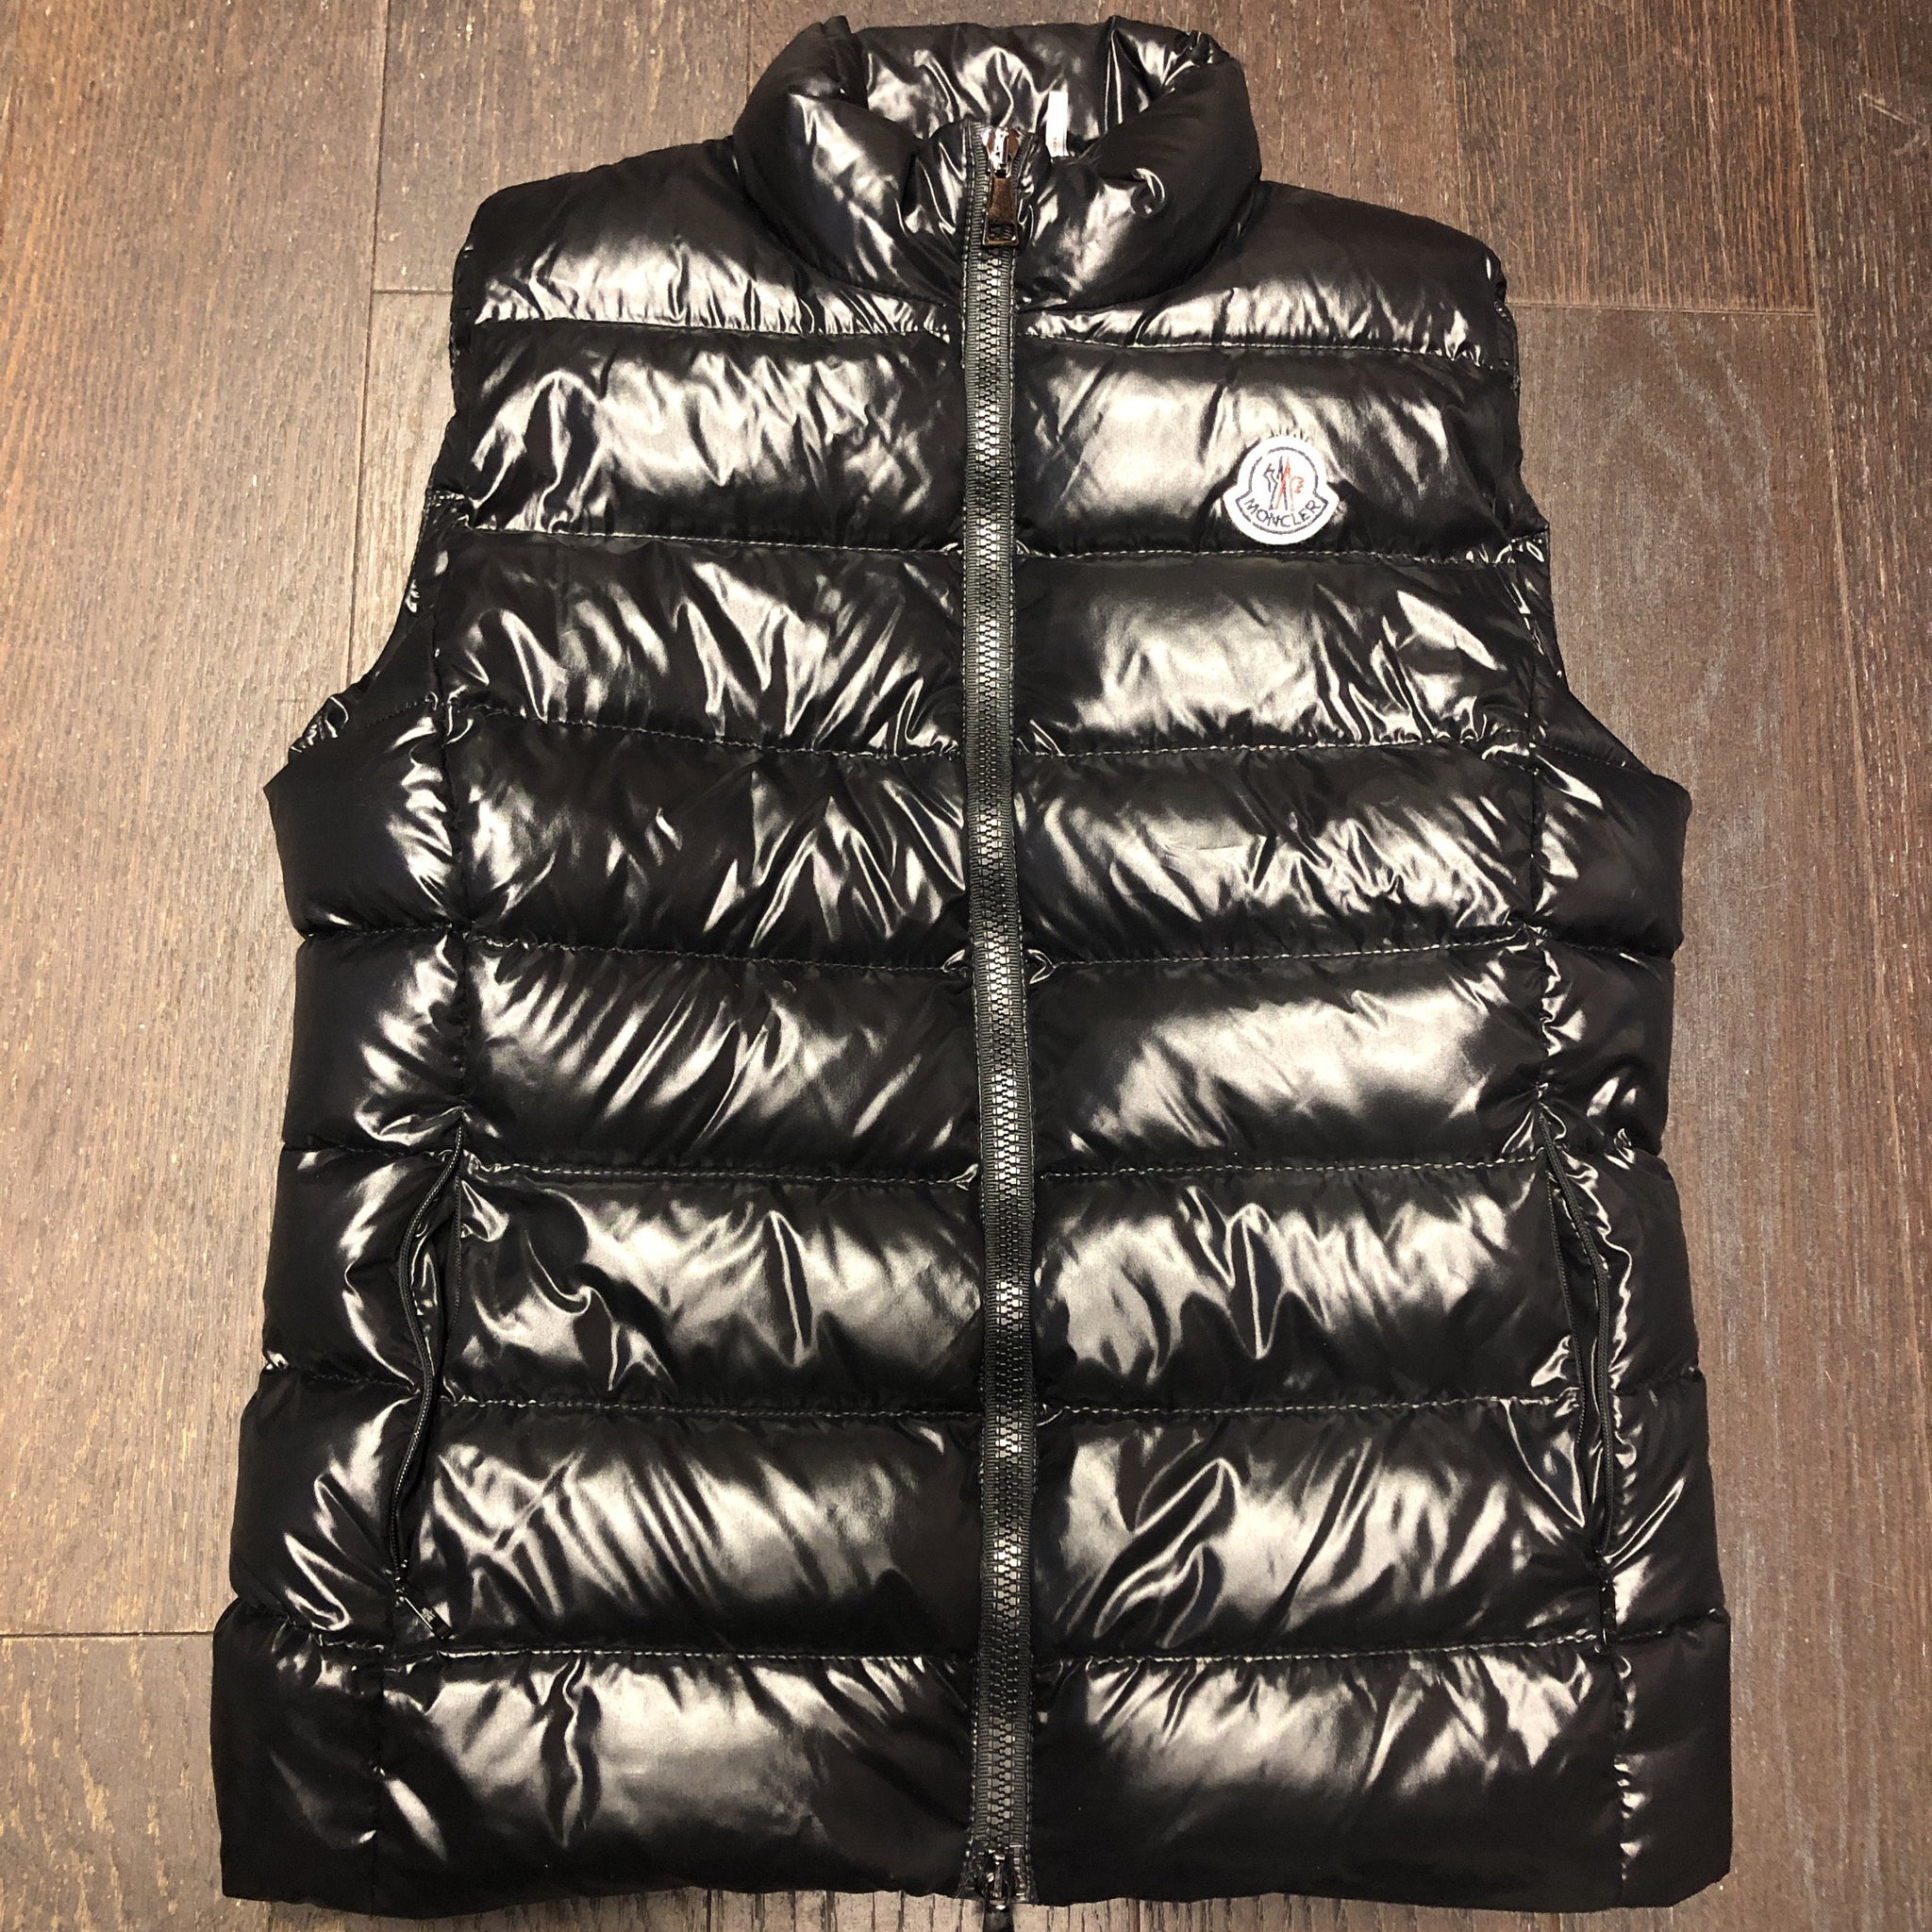 black moncler vest